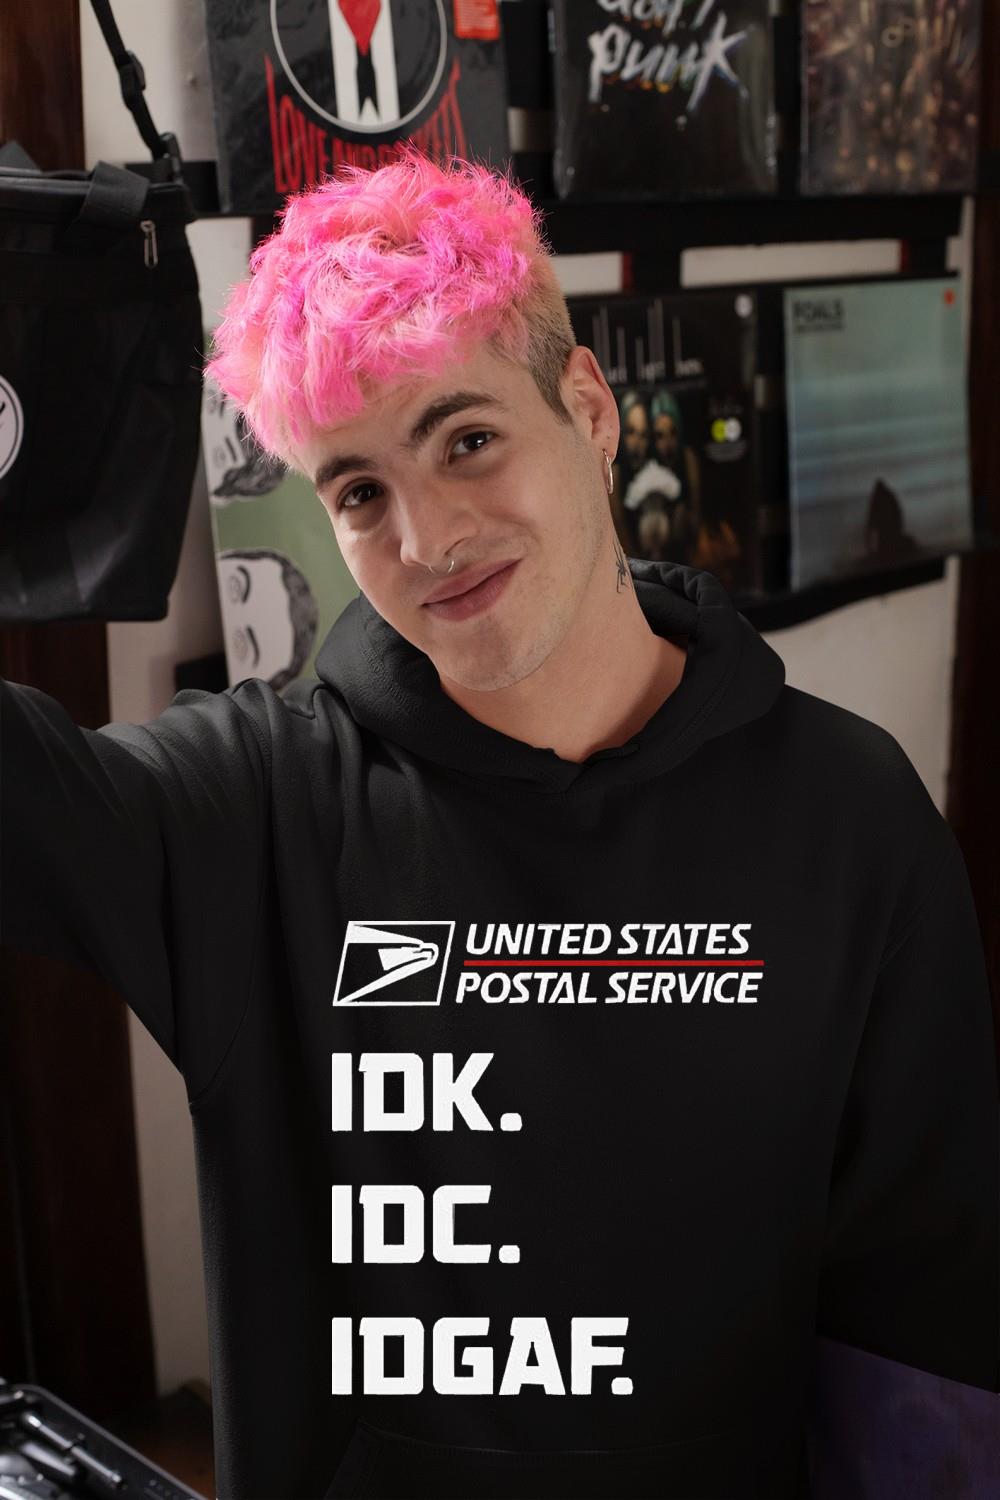 United States Postal Service IDK IDC IDGAF shirt